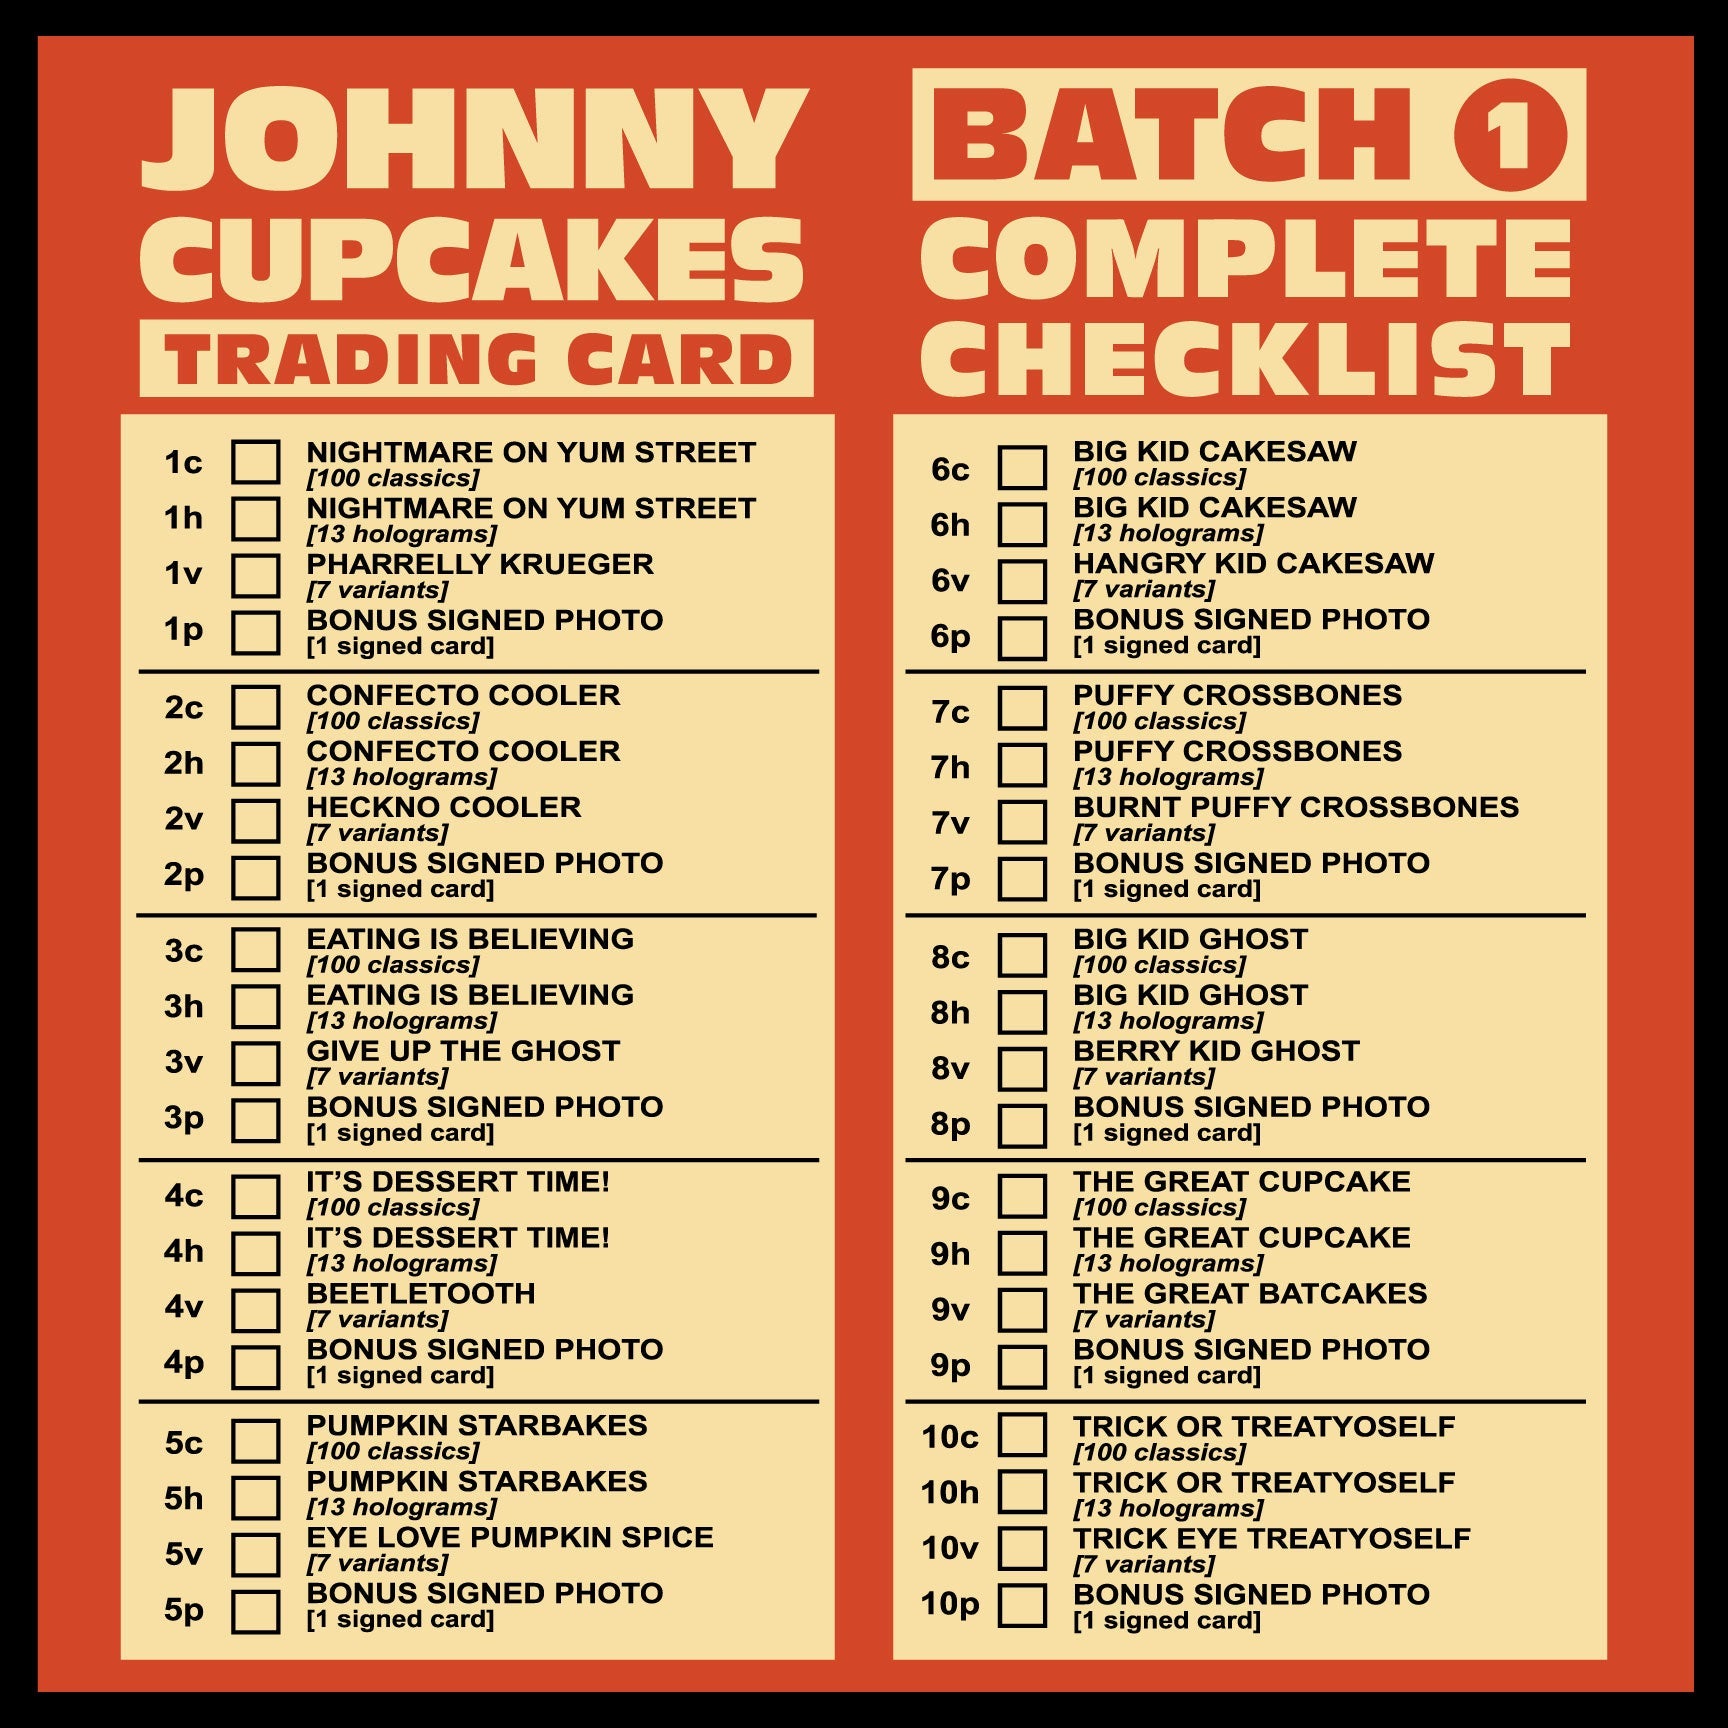 JC Trading Card (Batch 1) - 5 Pack